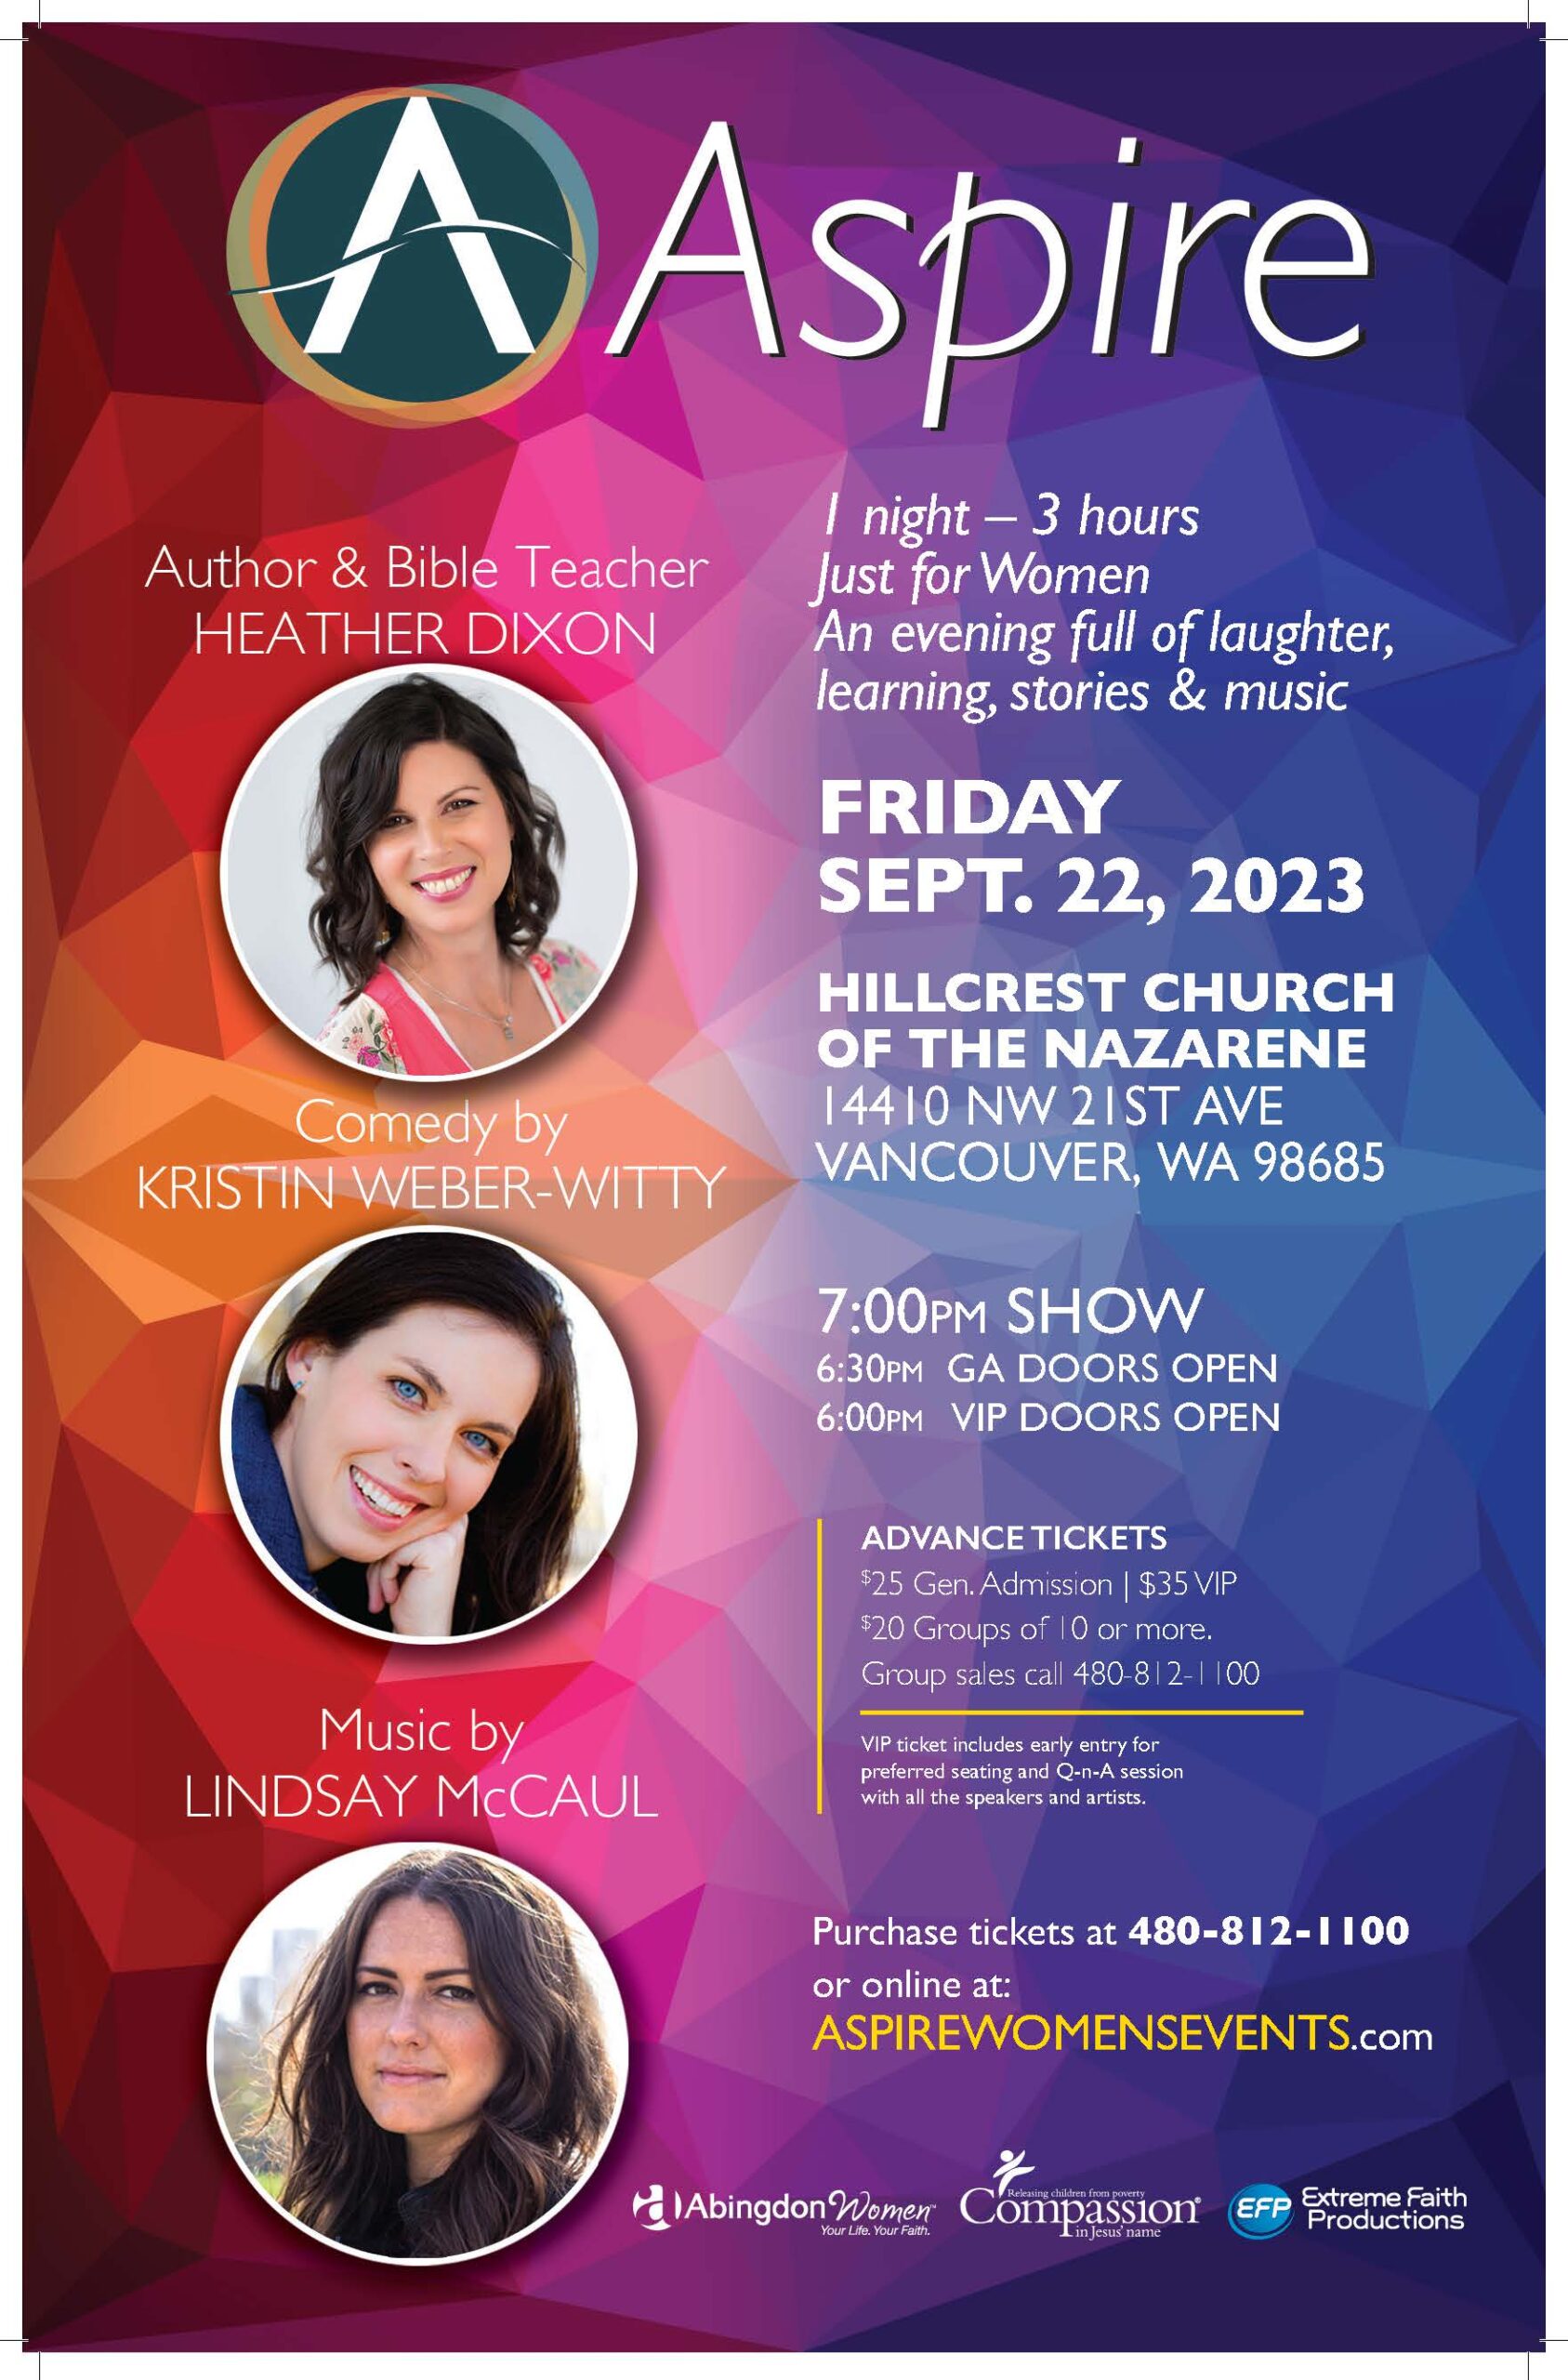 Aspire Friday Sept 22 Vancouver WA